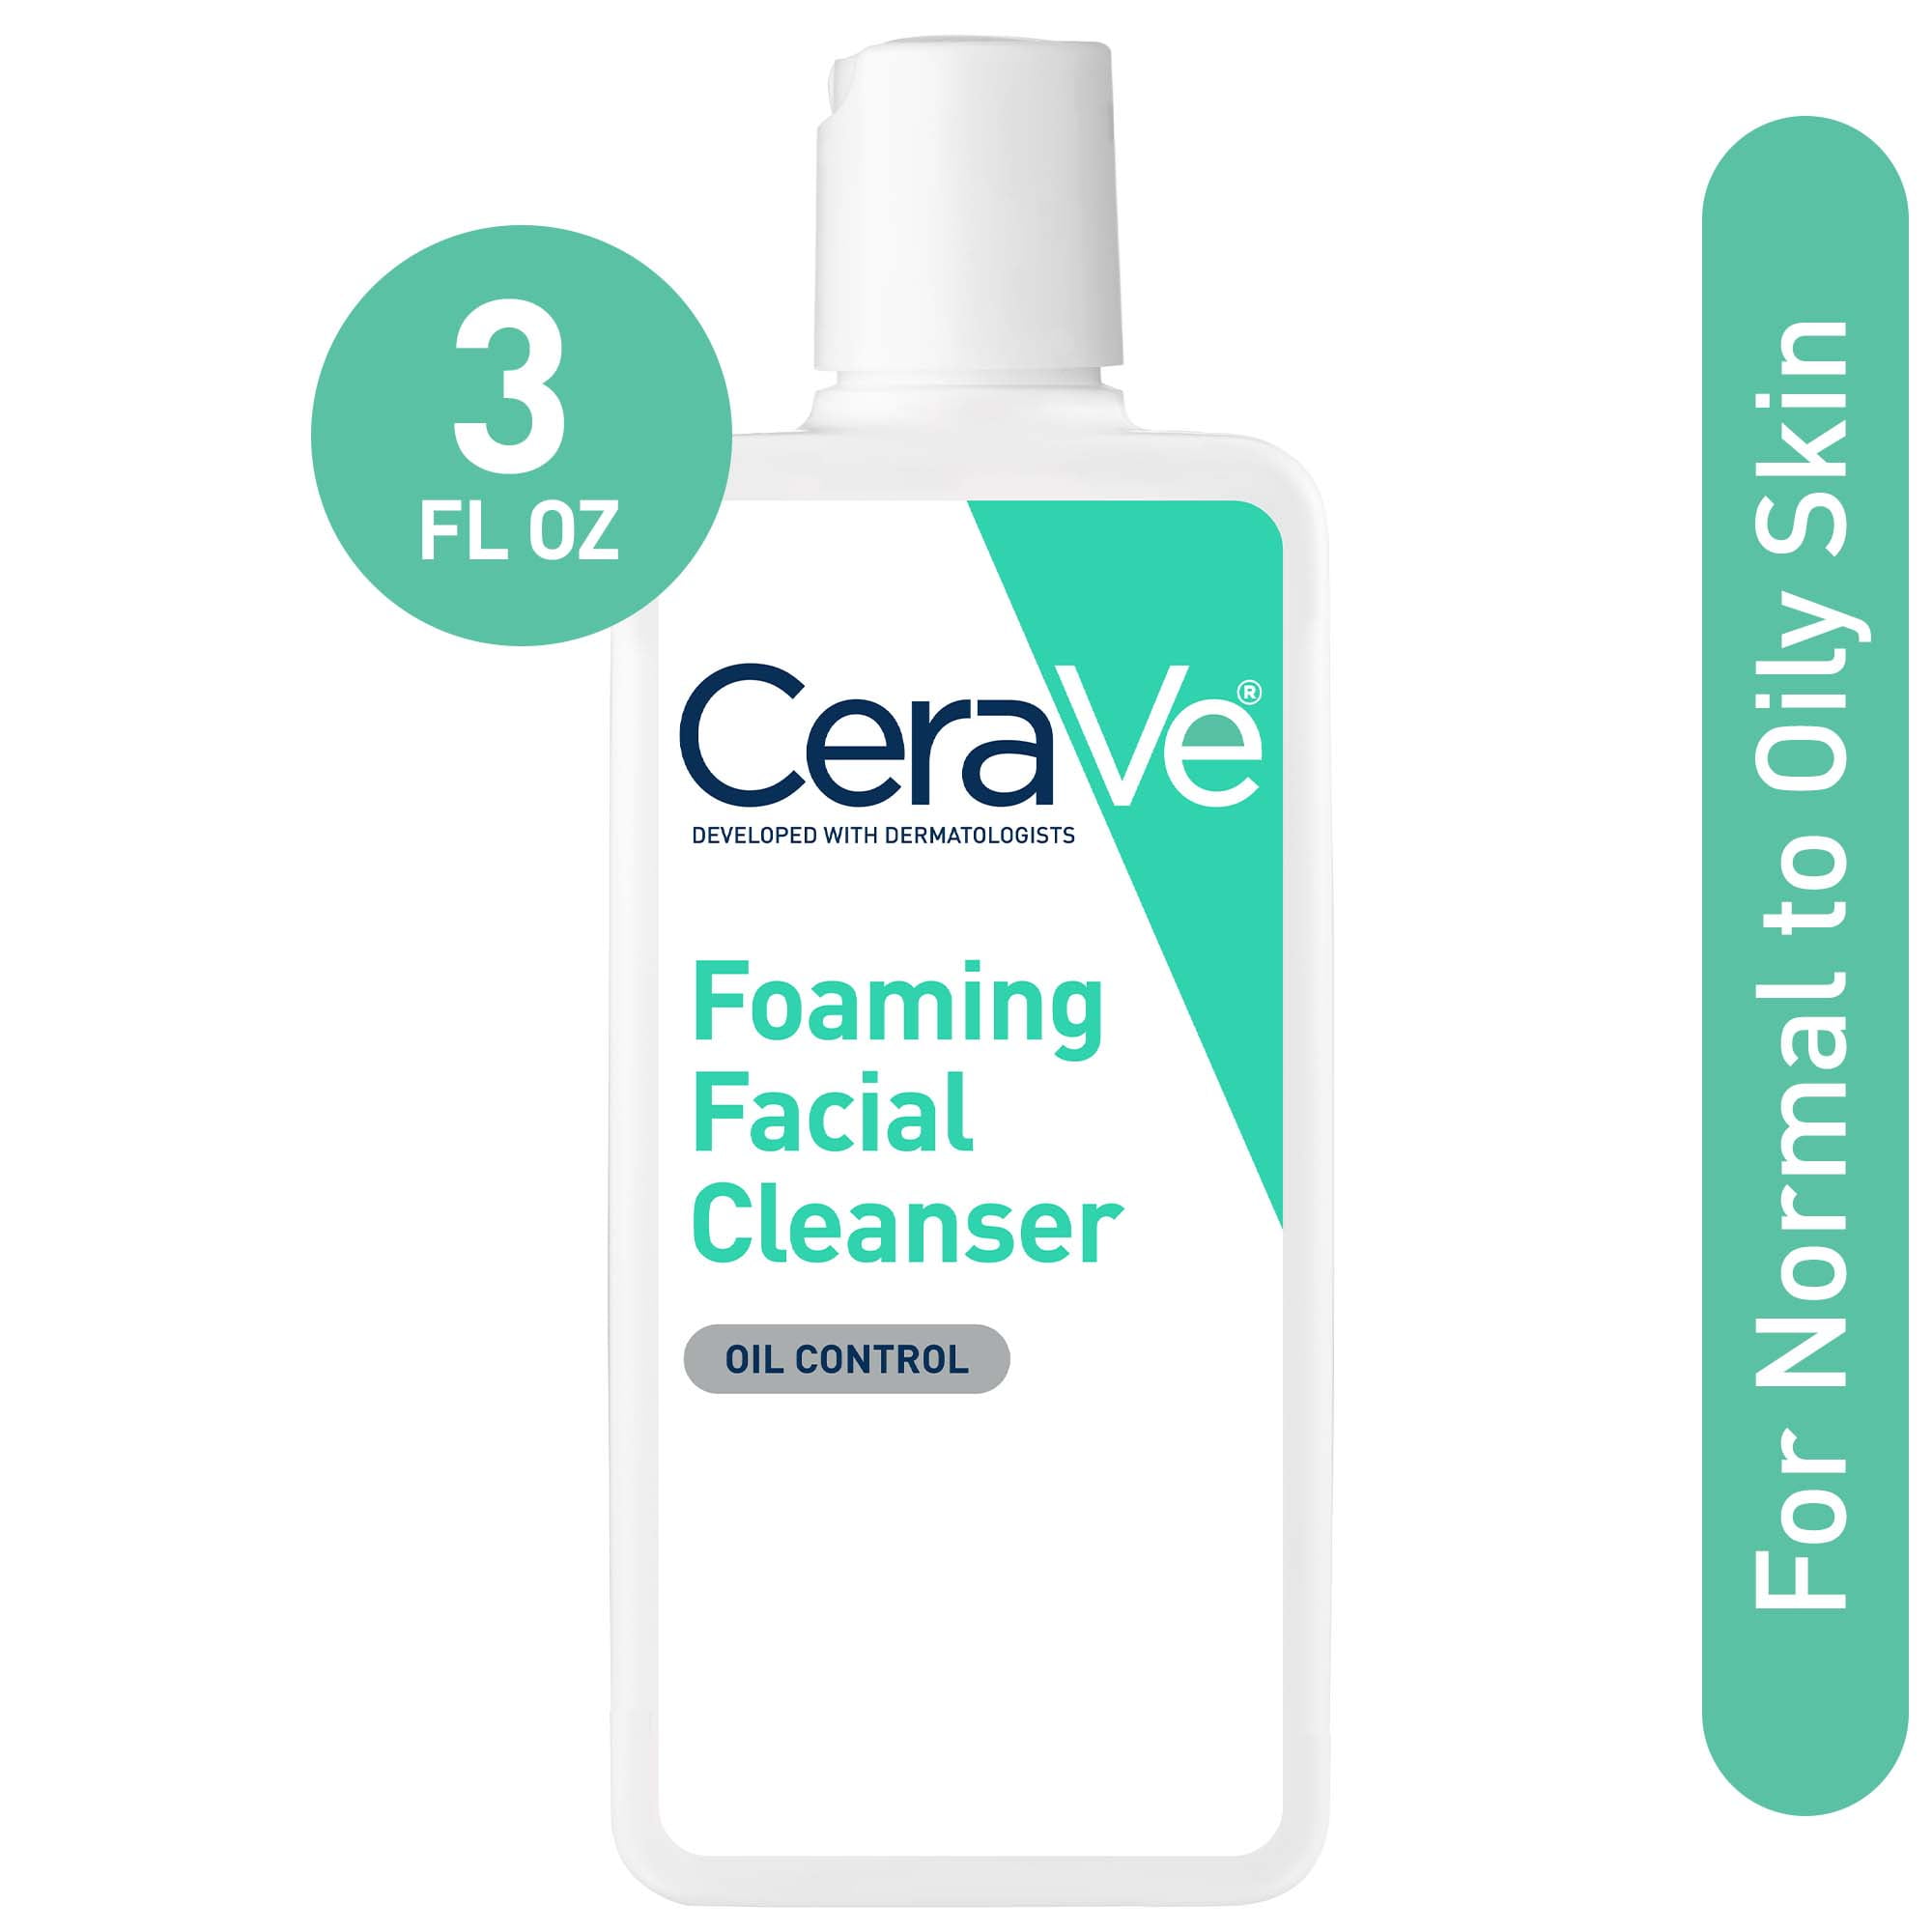 Foaming Facial Face Wash for Oily Skin, 3 fl oz. - Walmart.com